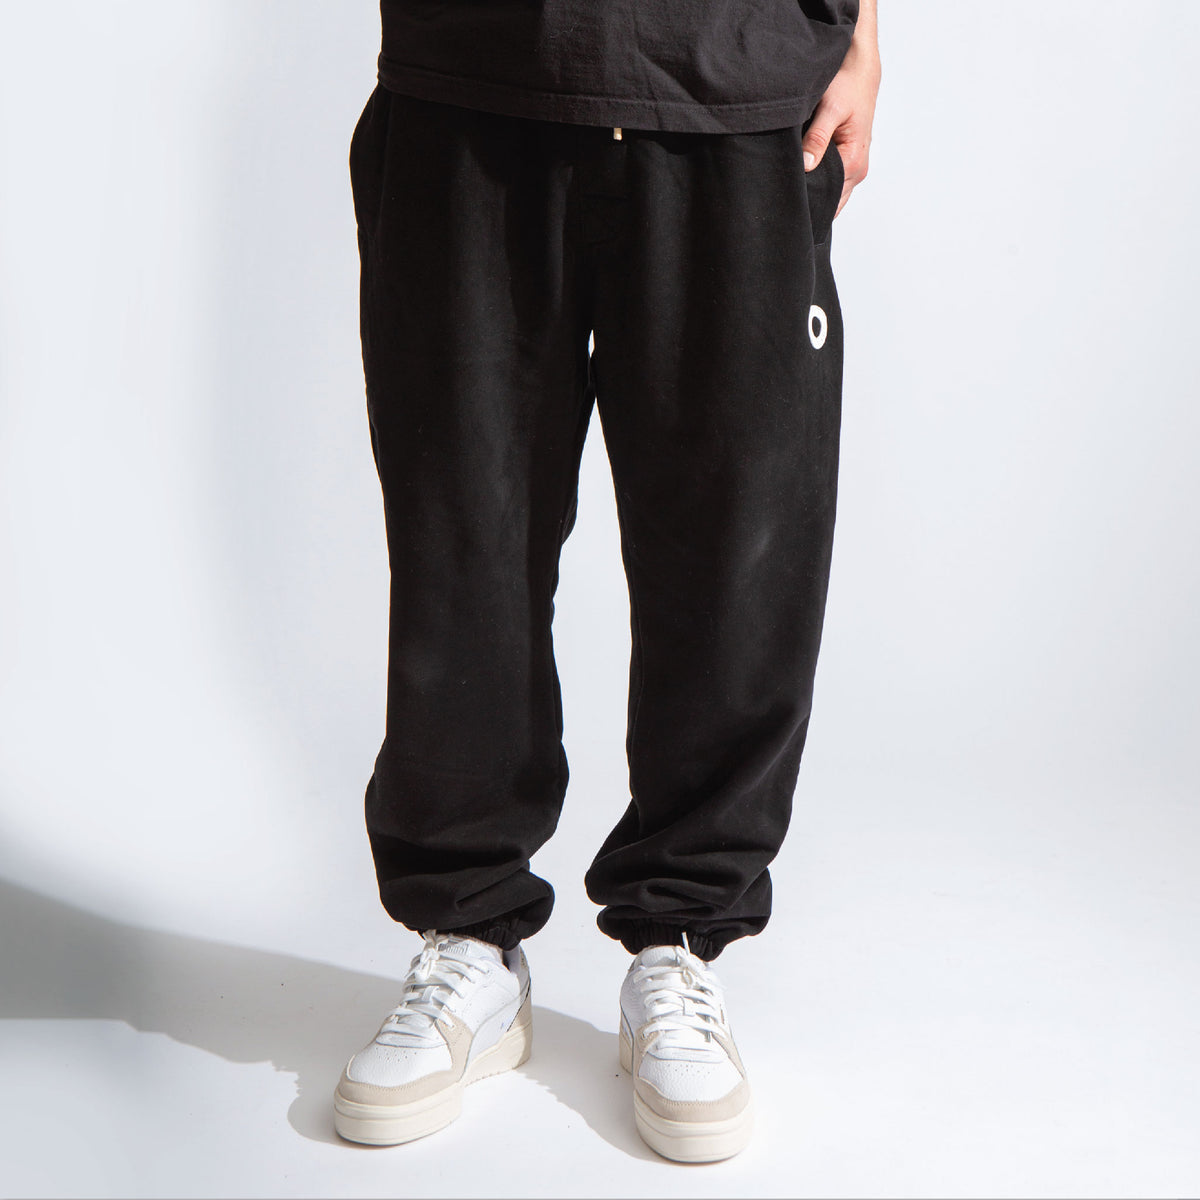 Buy XL Brock's Yoga Sweatpants Black SKU: 500960 at the price of US$ 19